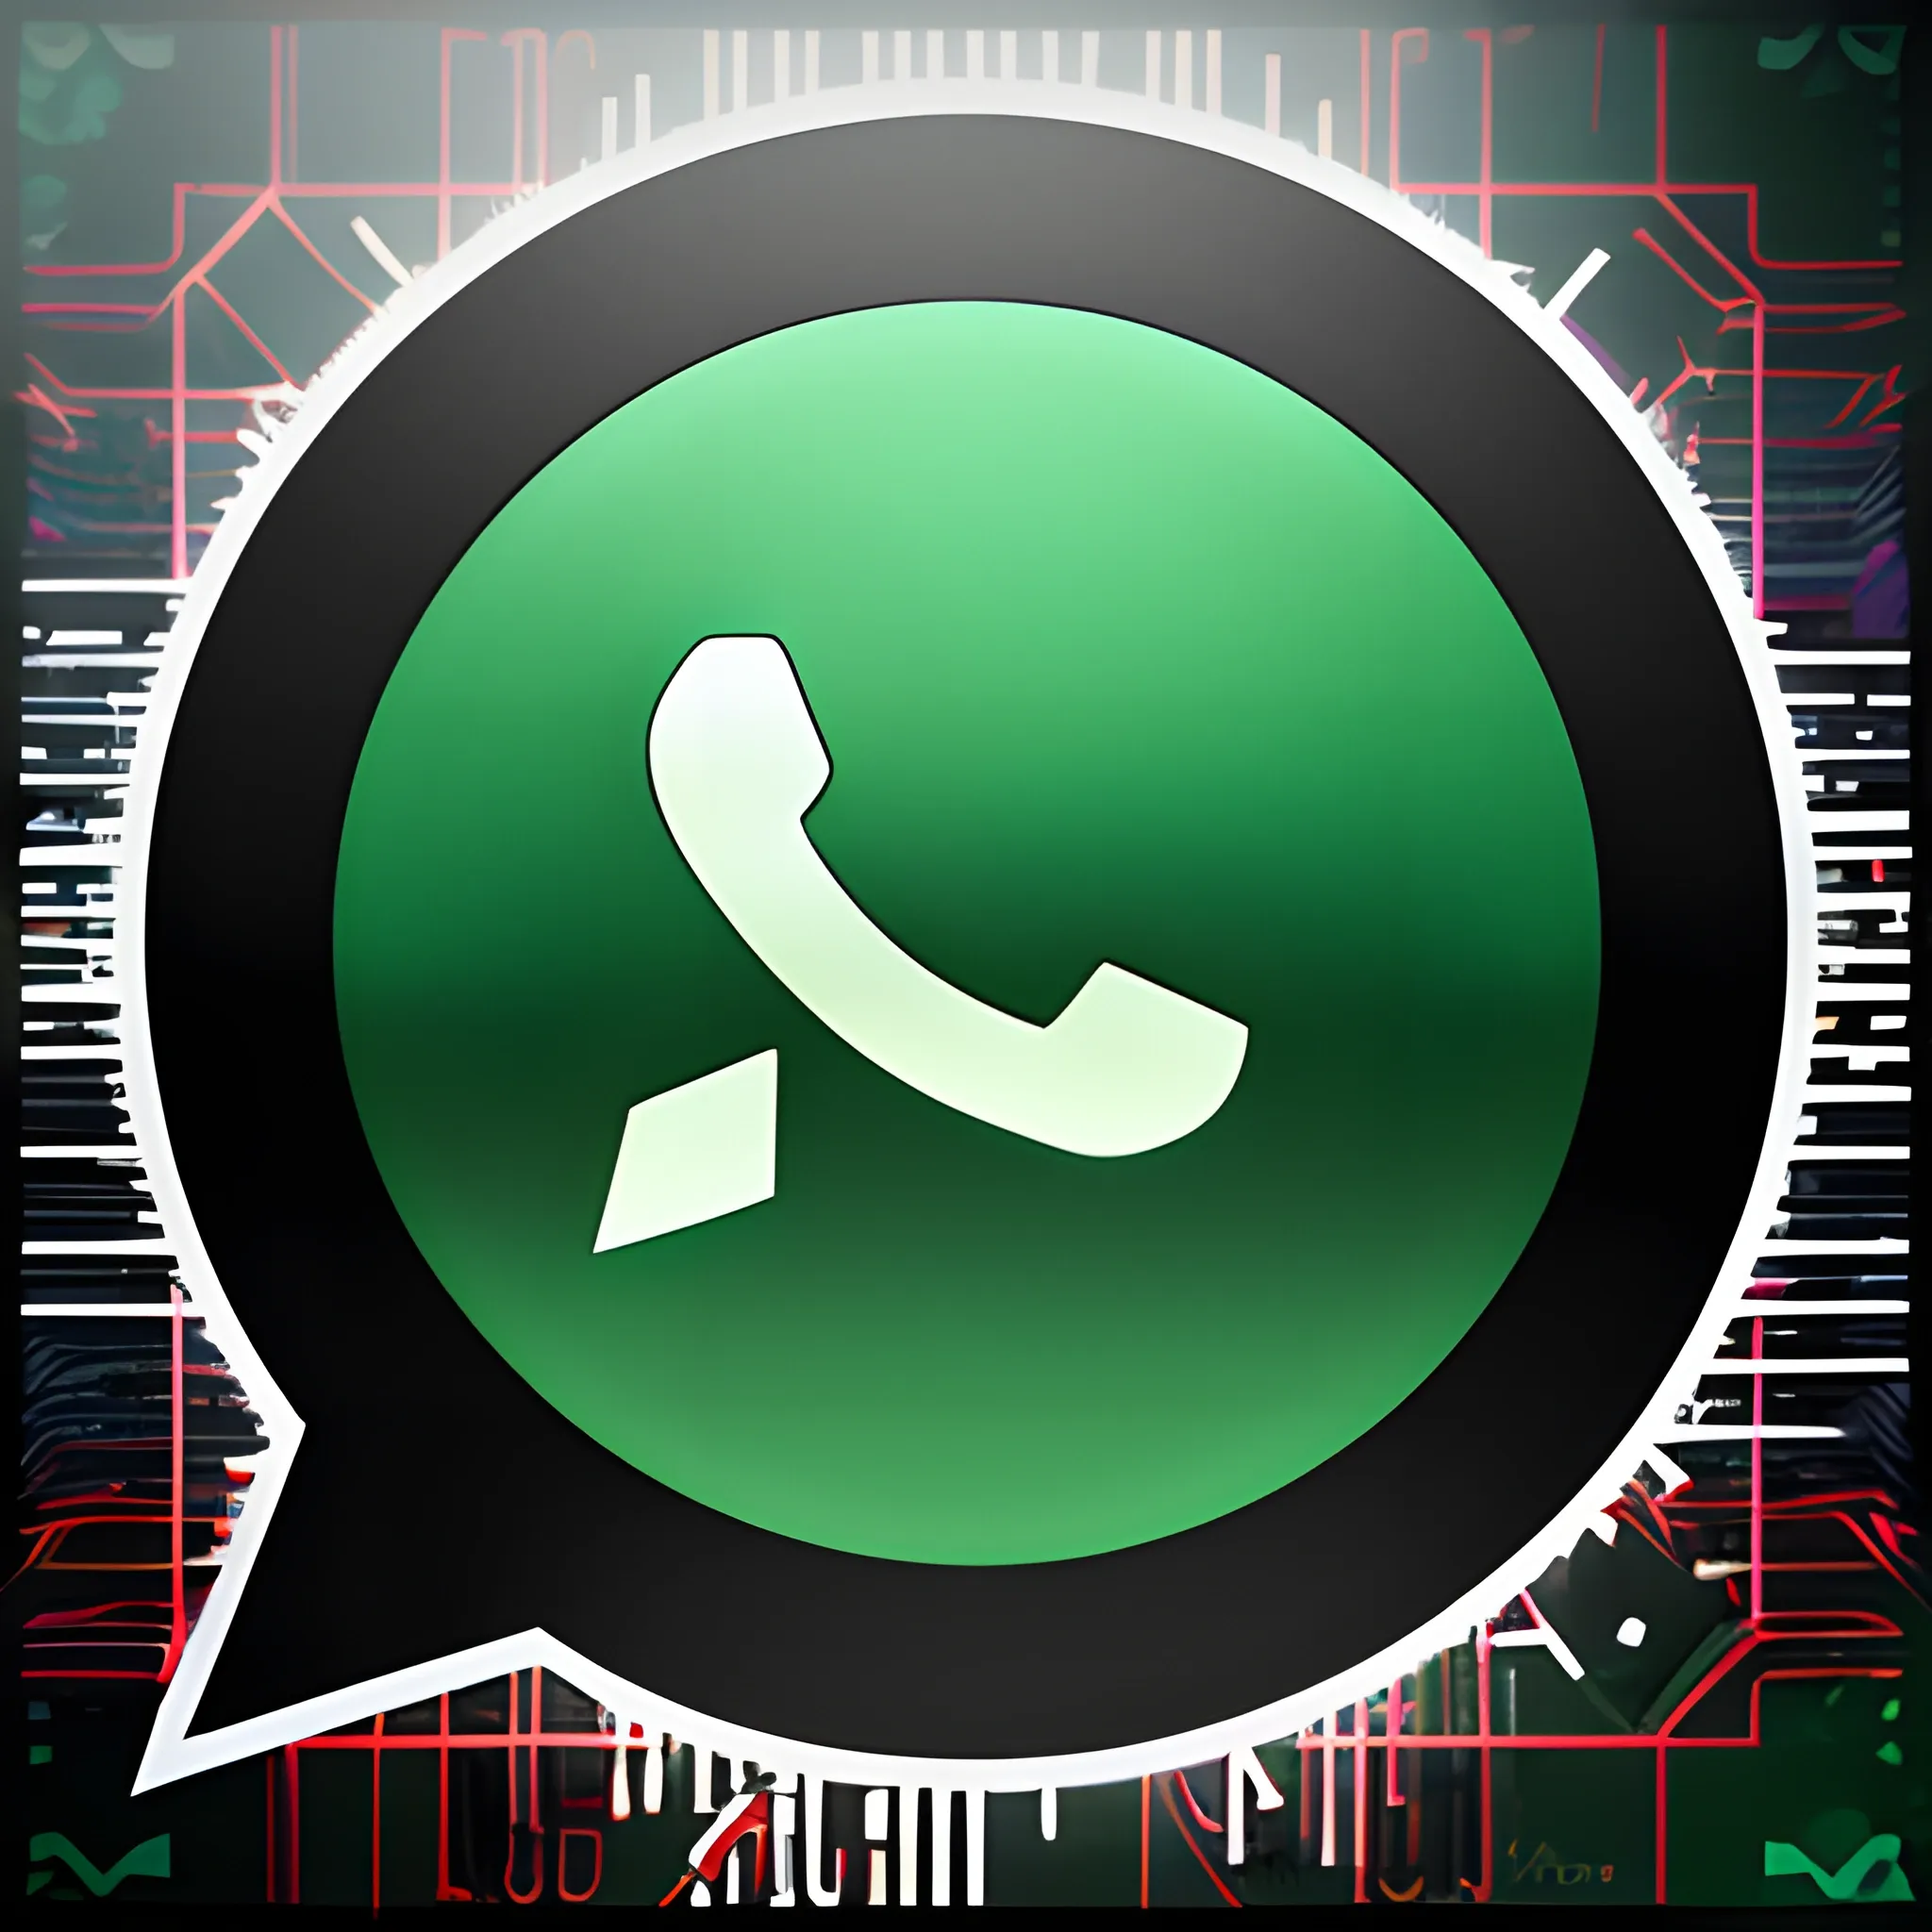 whatsapp logo with cyberpunk style